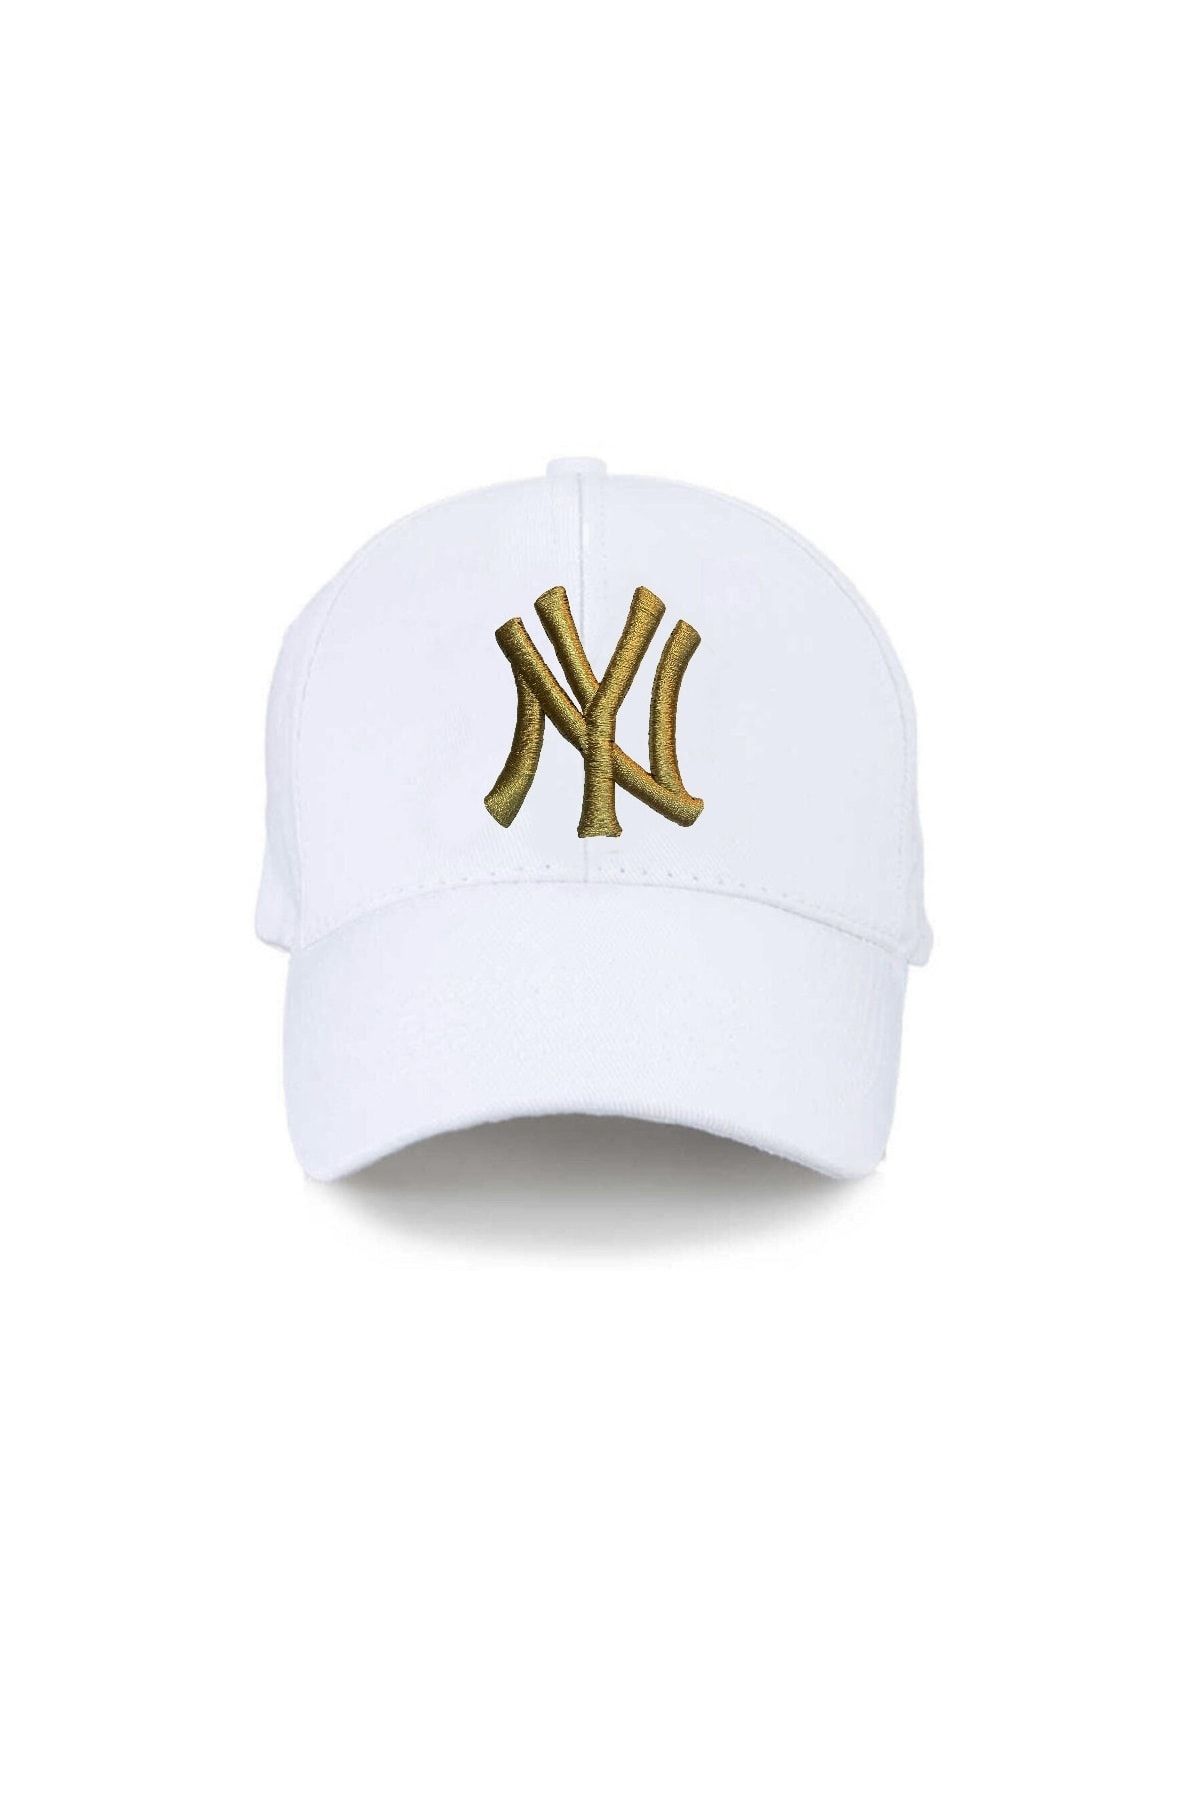 NuxFah Ny New York Unisex Beyaz Şapka Özel Altın Gold Nakış